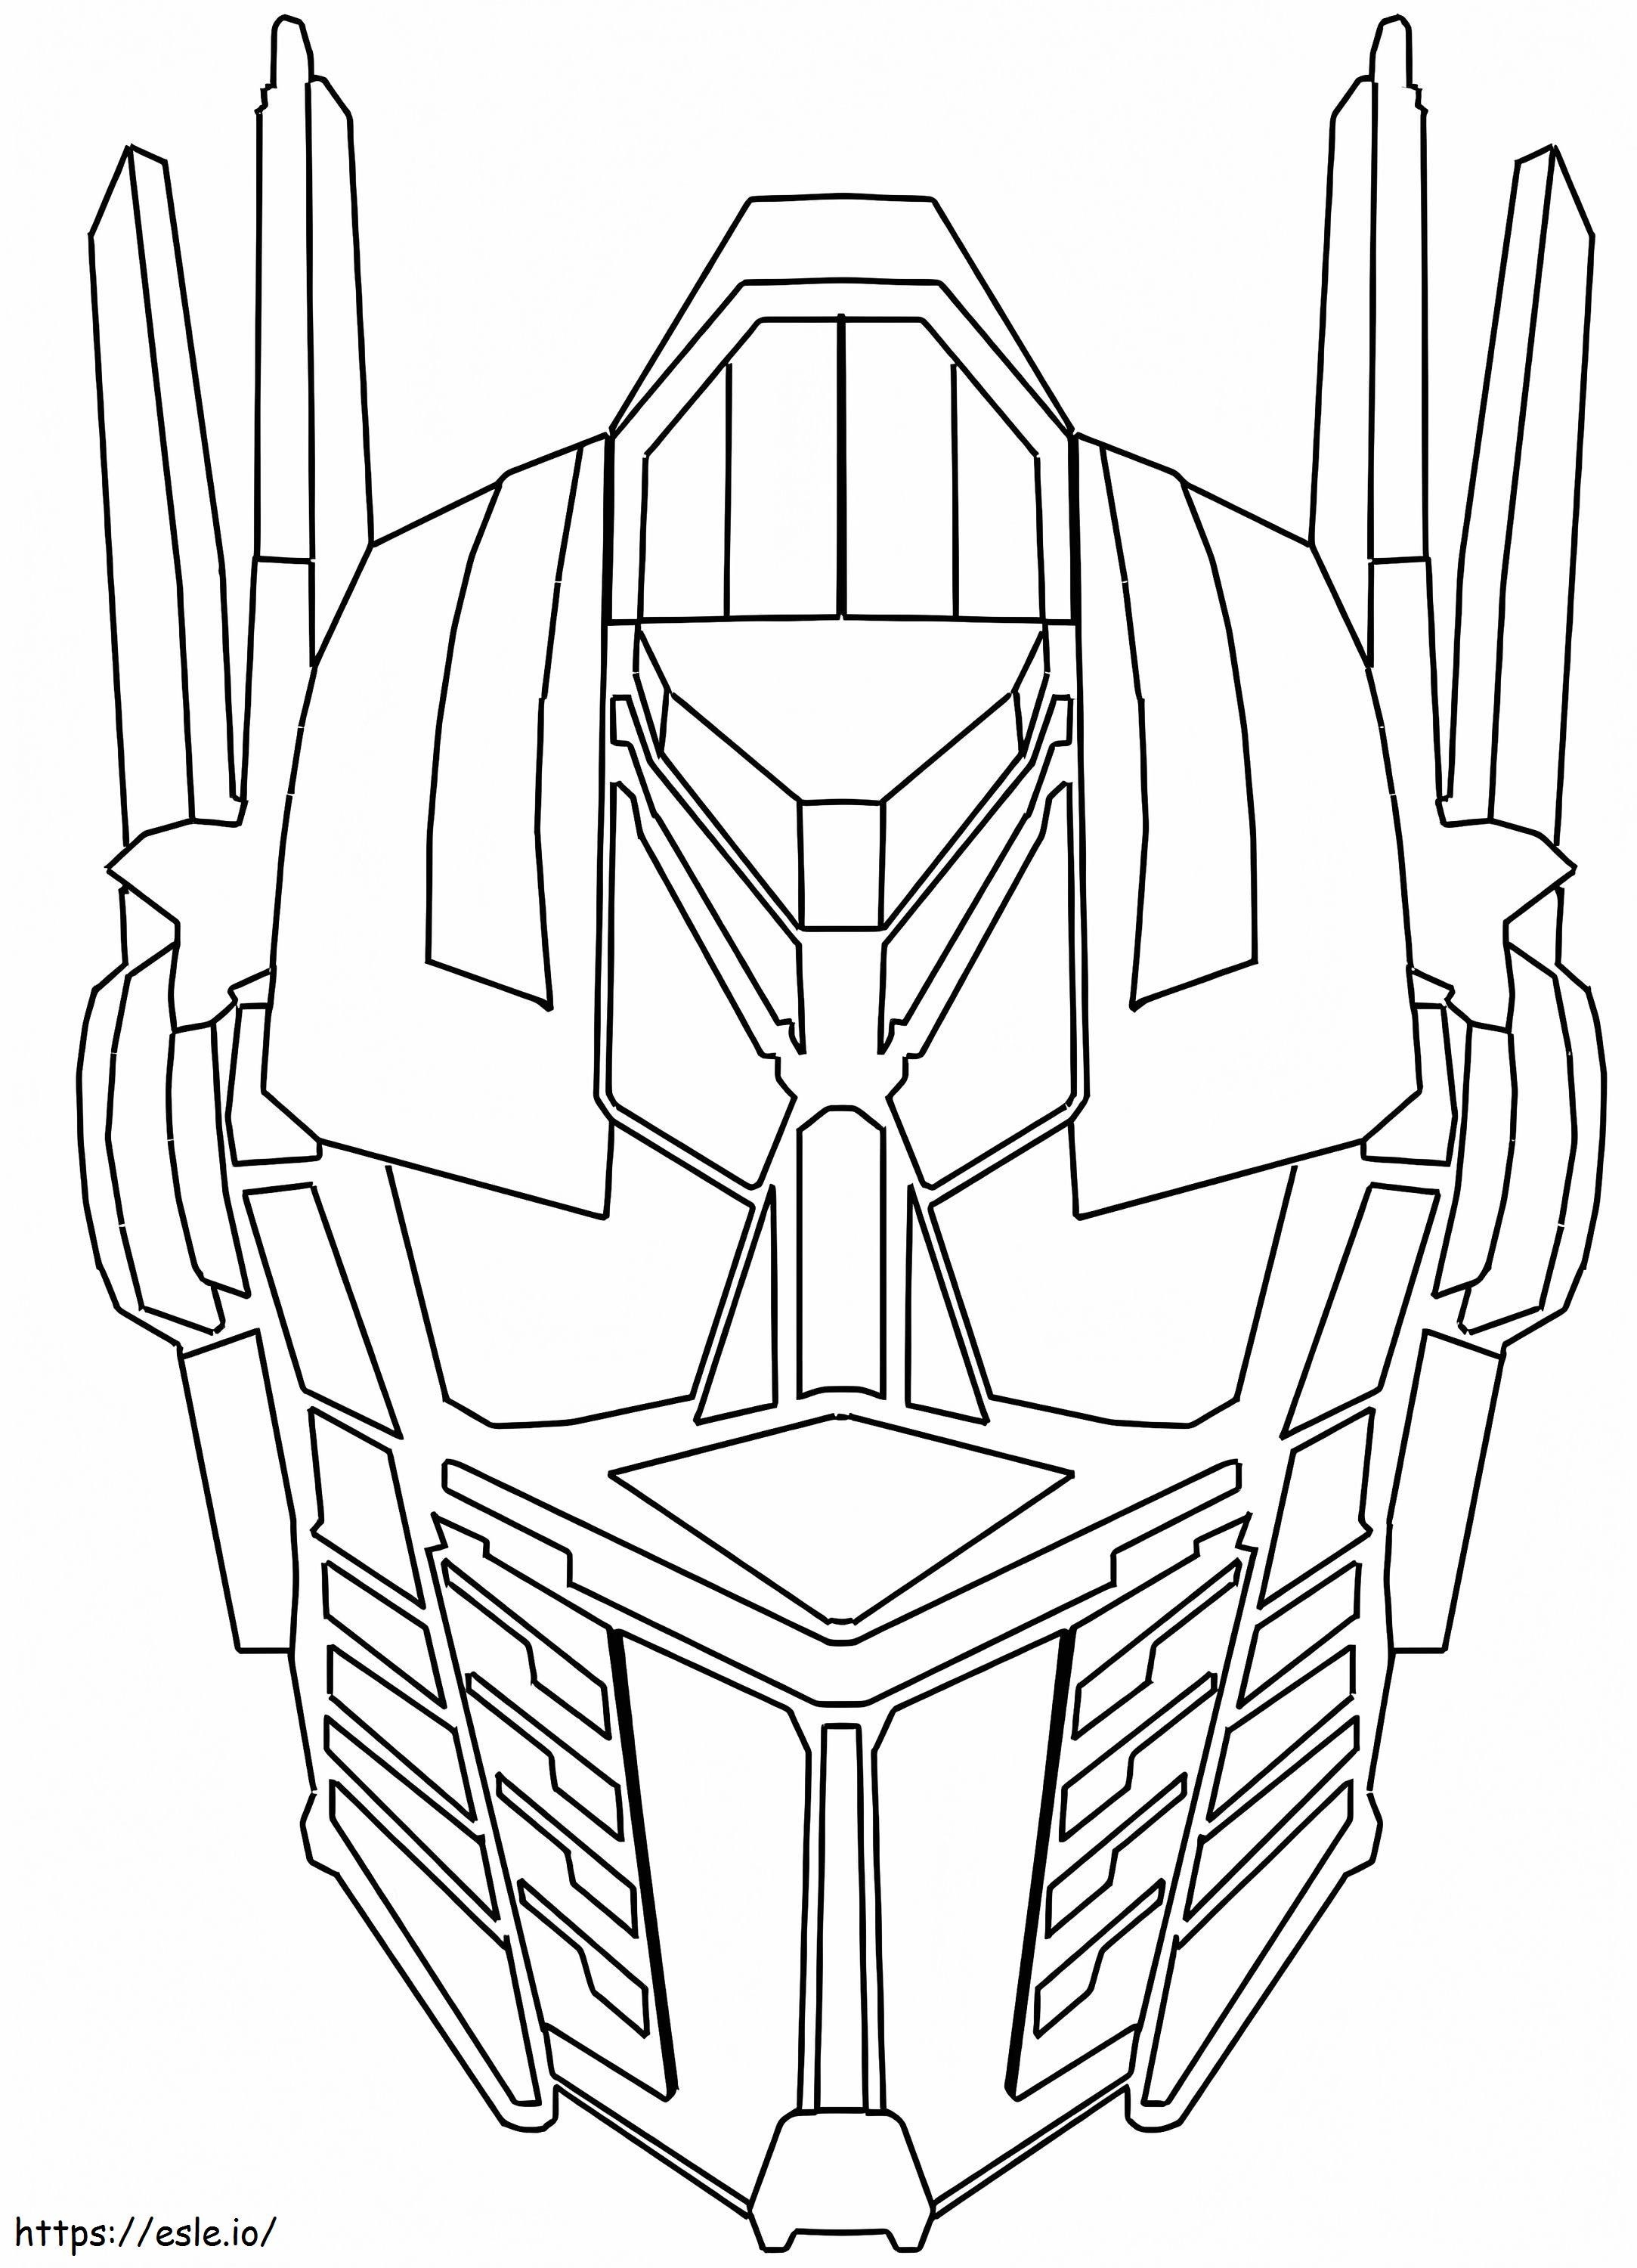 Optimus prime head coloring page